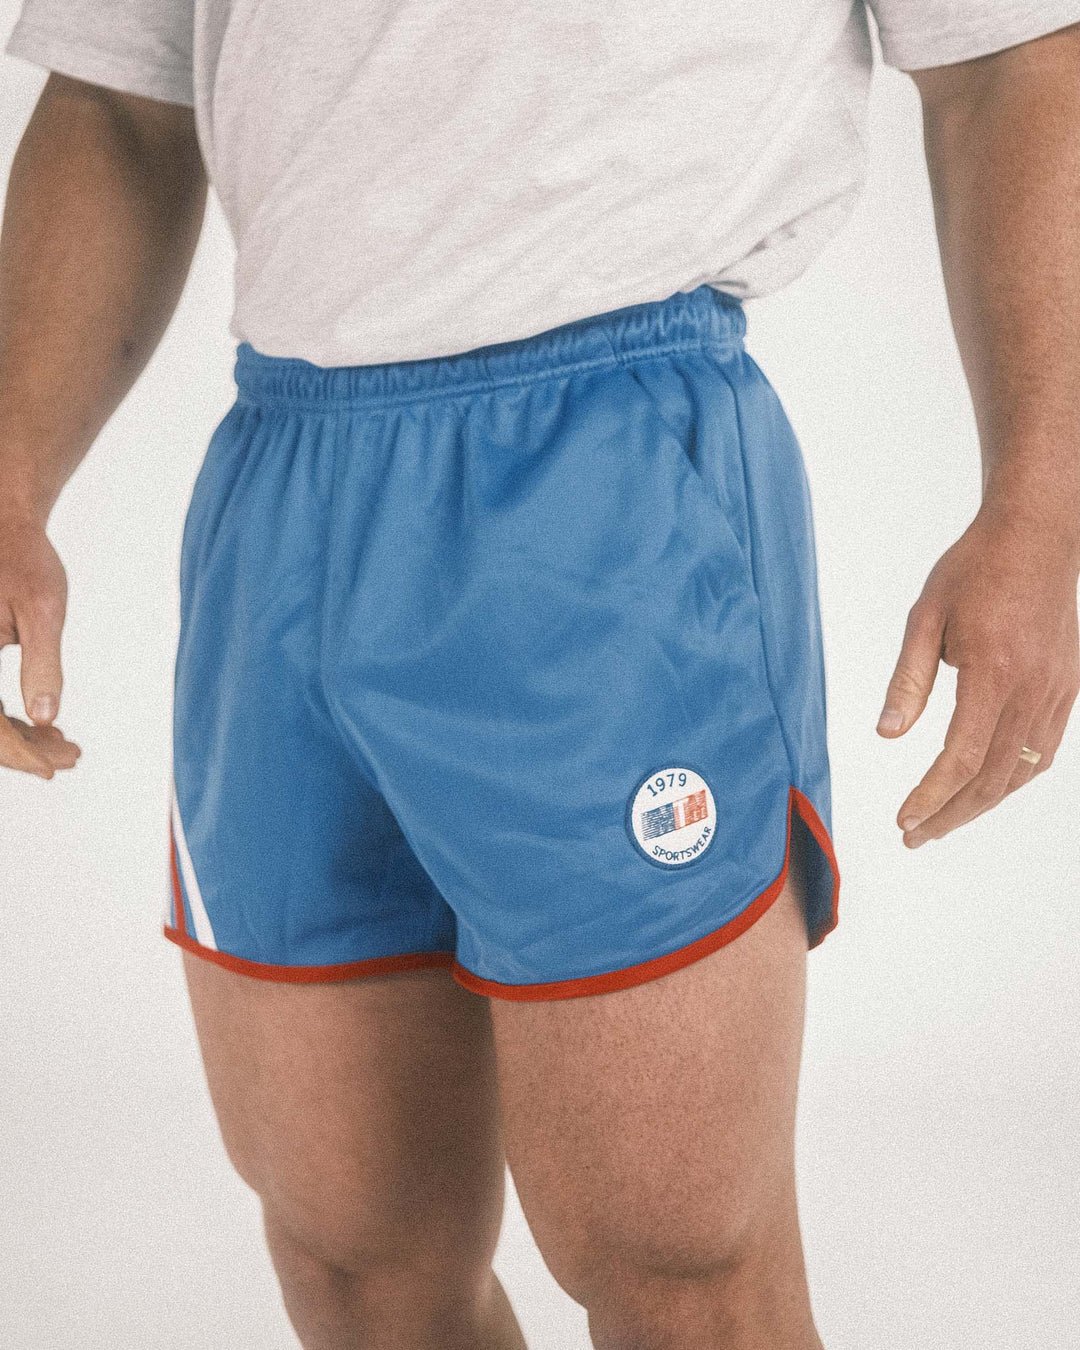 Retro 3 Stripe Sport Shorts - Blue